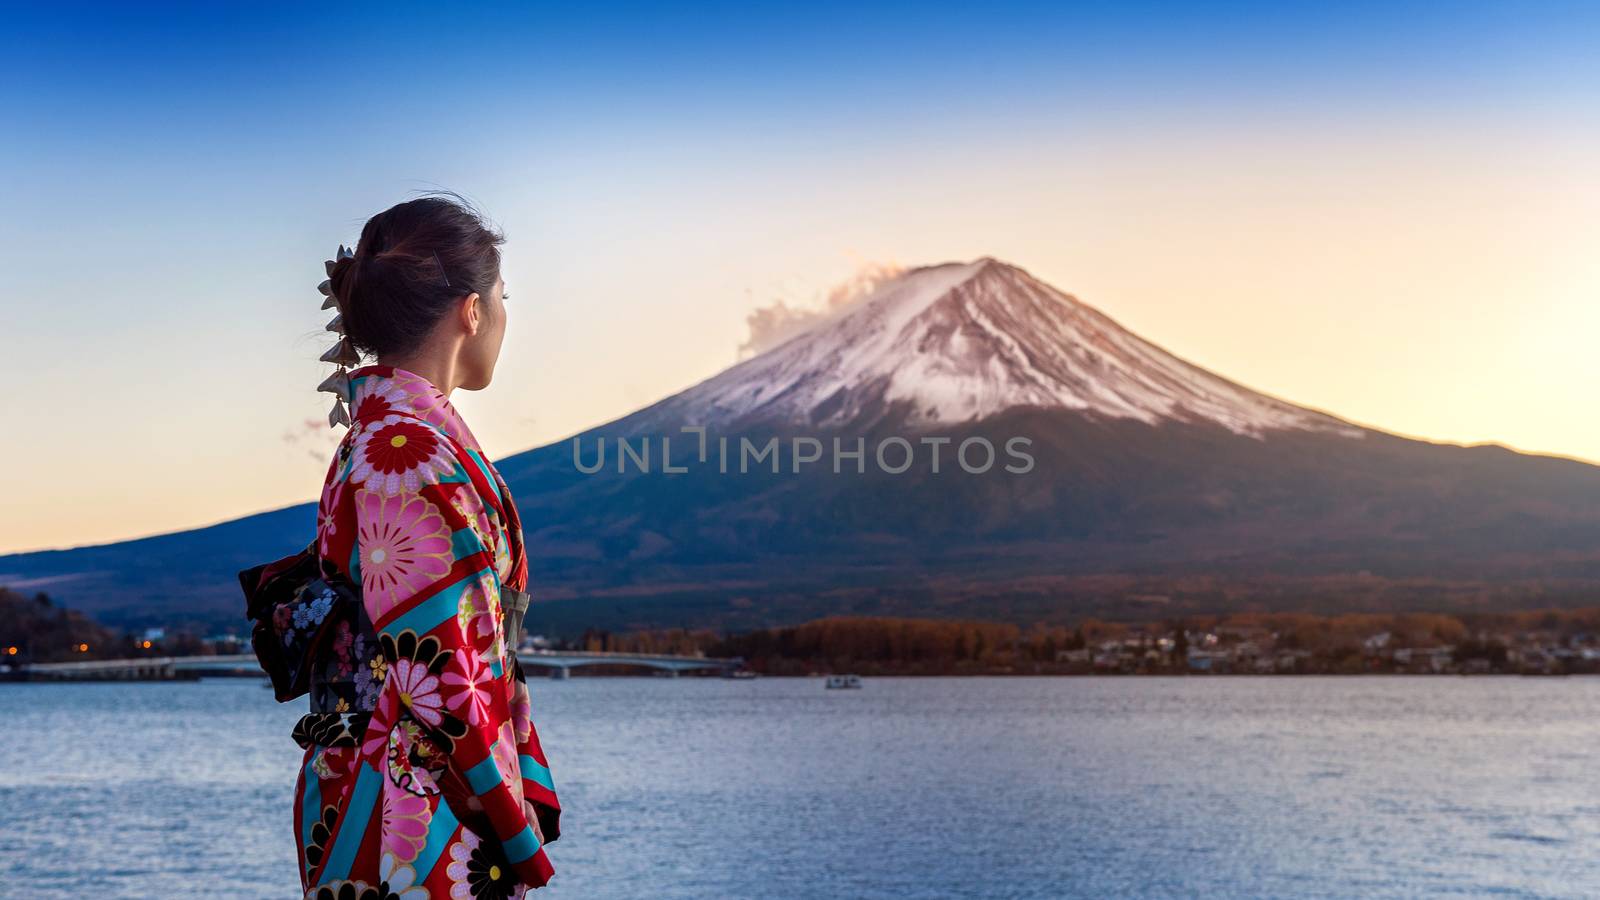 Asian woman wearing japanese traditional kimono at Fuji mountain. Sunset at Kawaguchiko lake in Japan. by gutarphotoghaphy